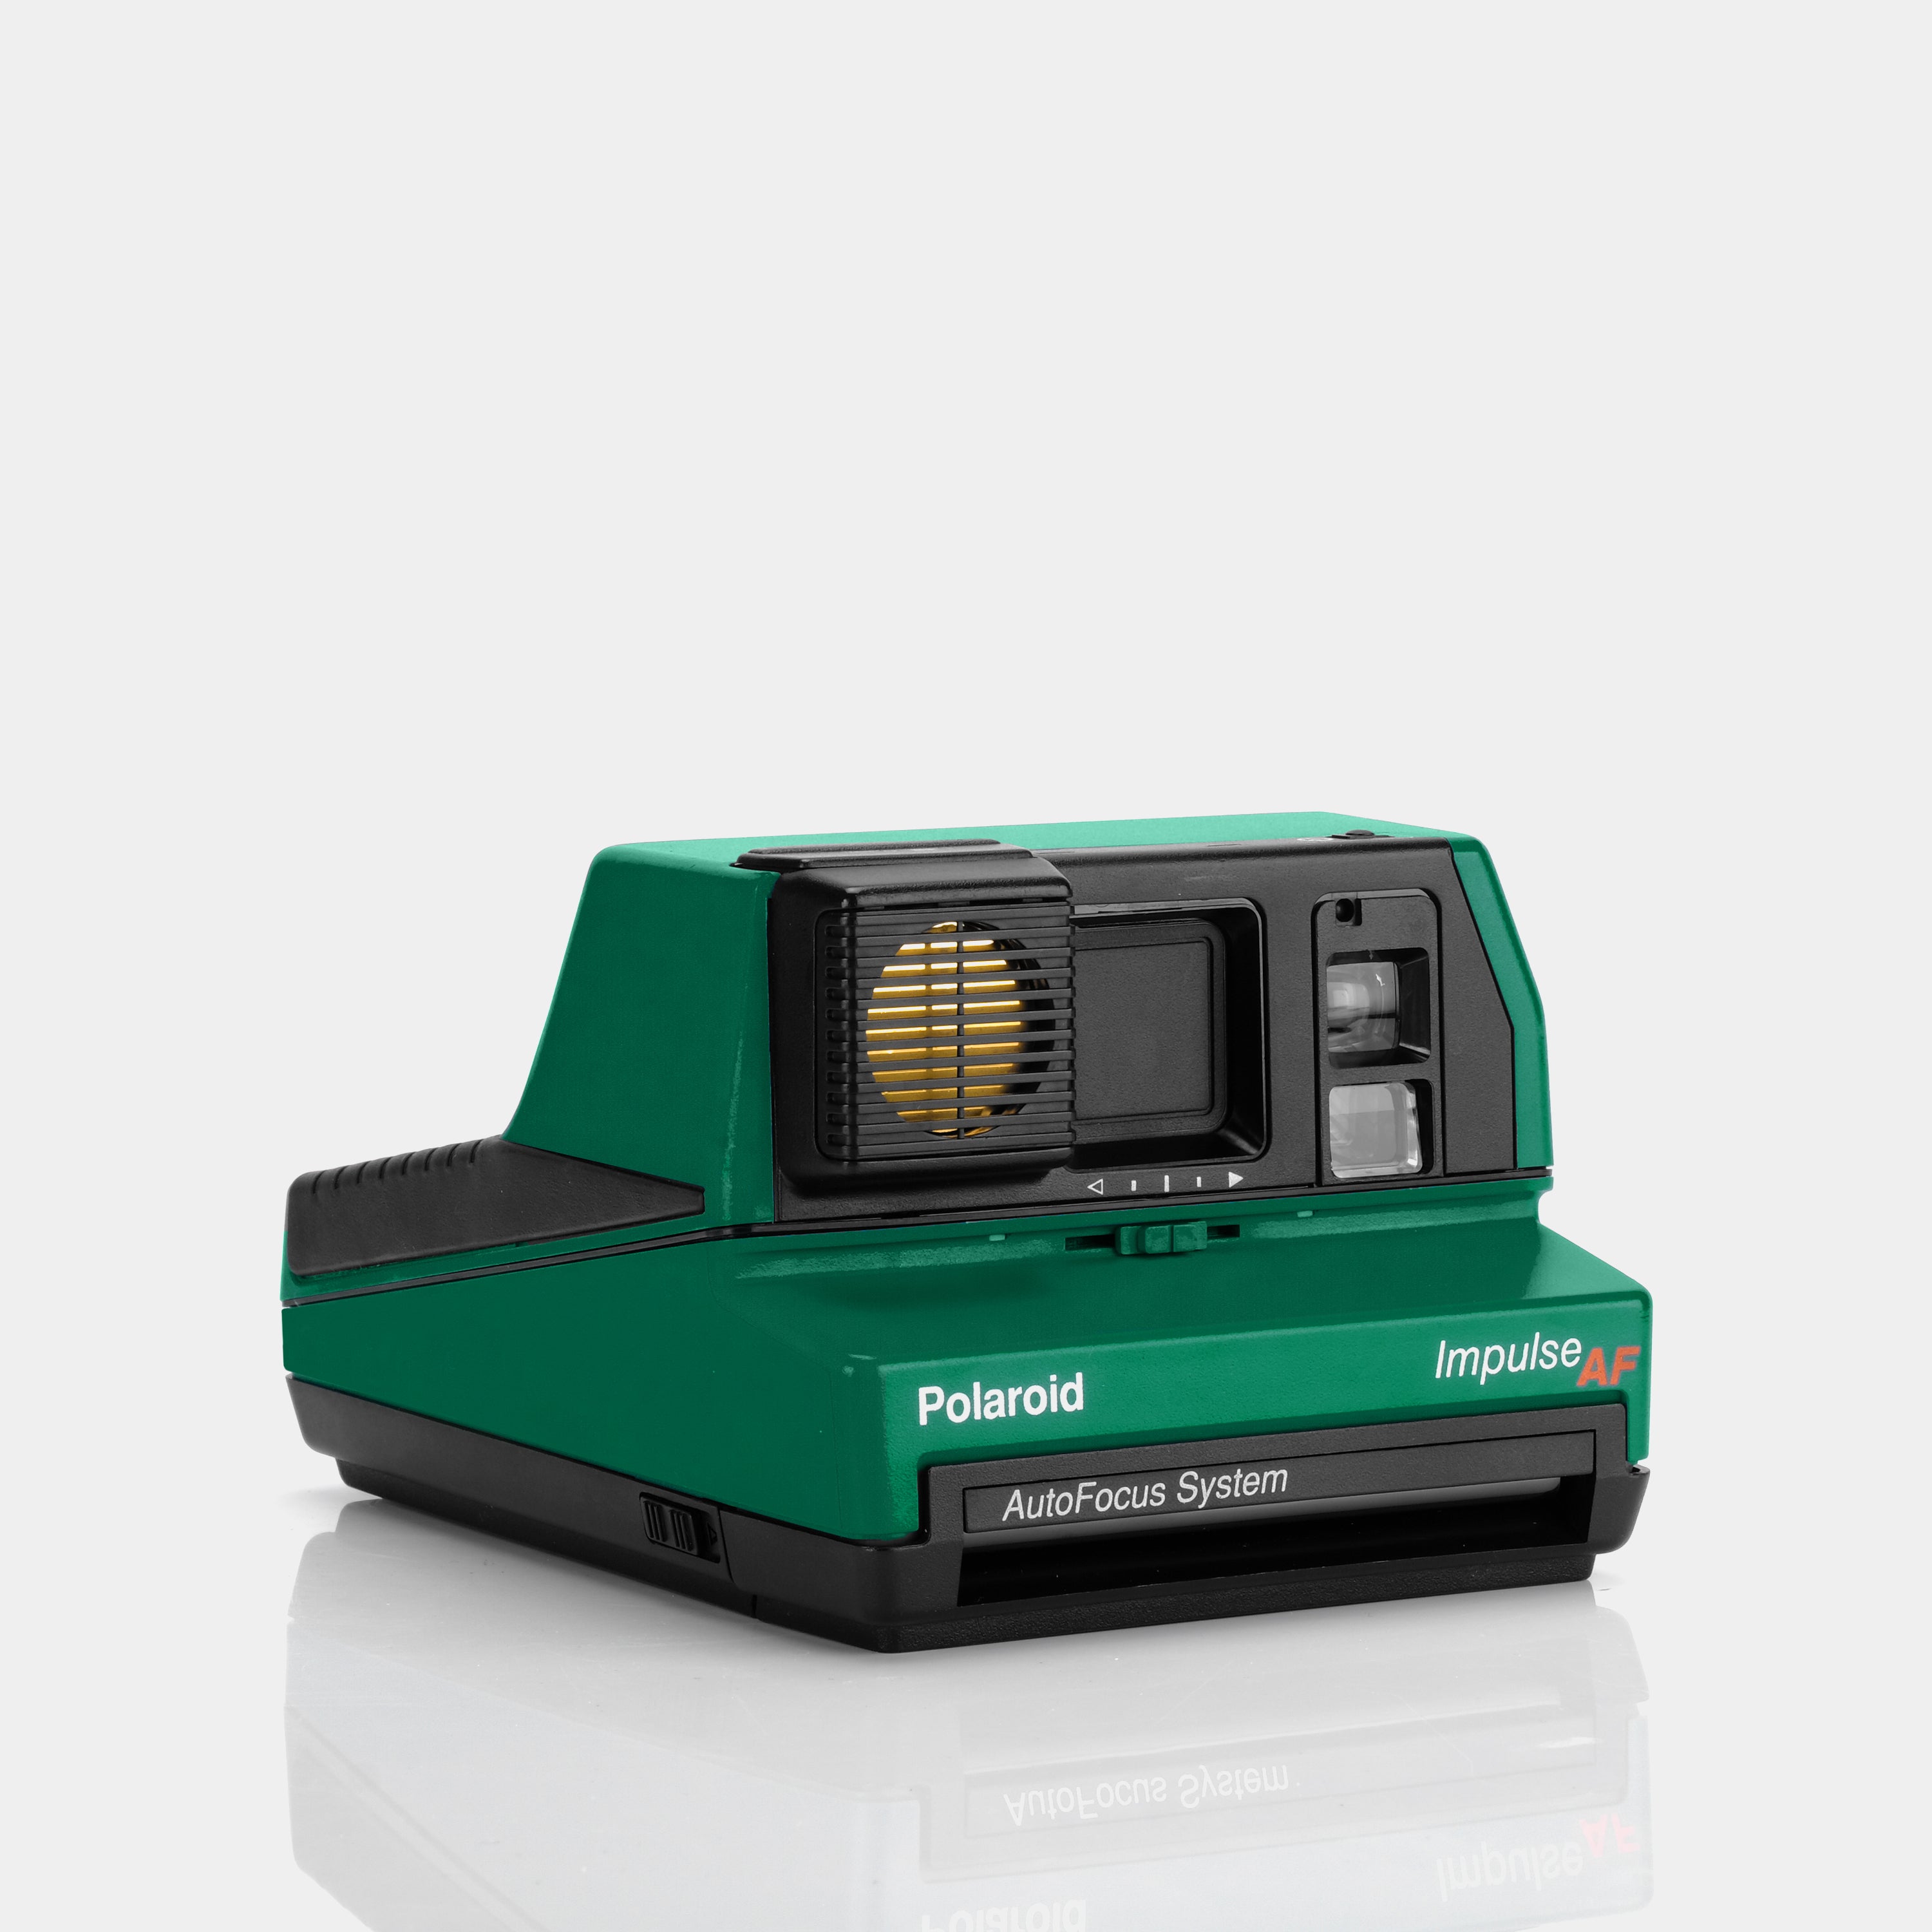 Polaroid 600 Impulse AutoFocus Jade Green Instant Film Camera (B Grade)